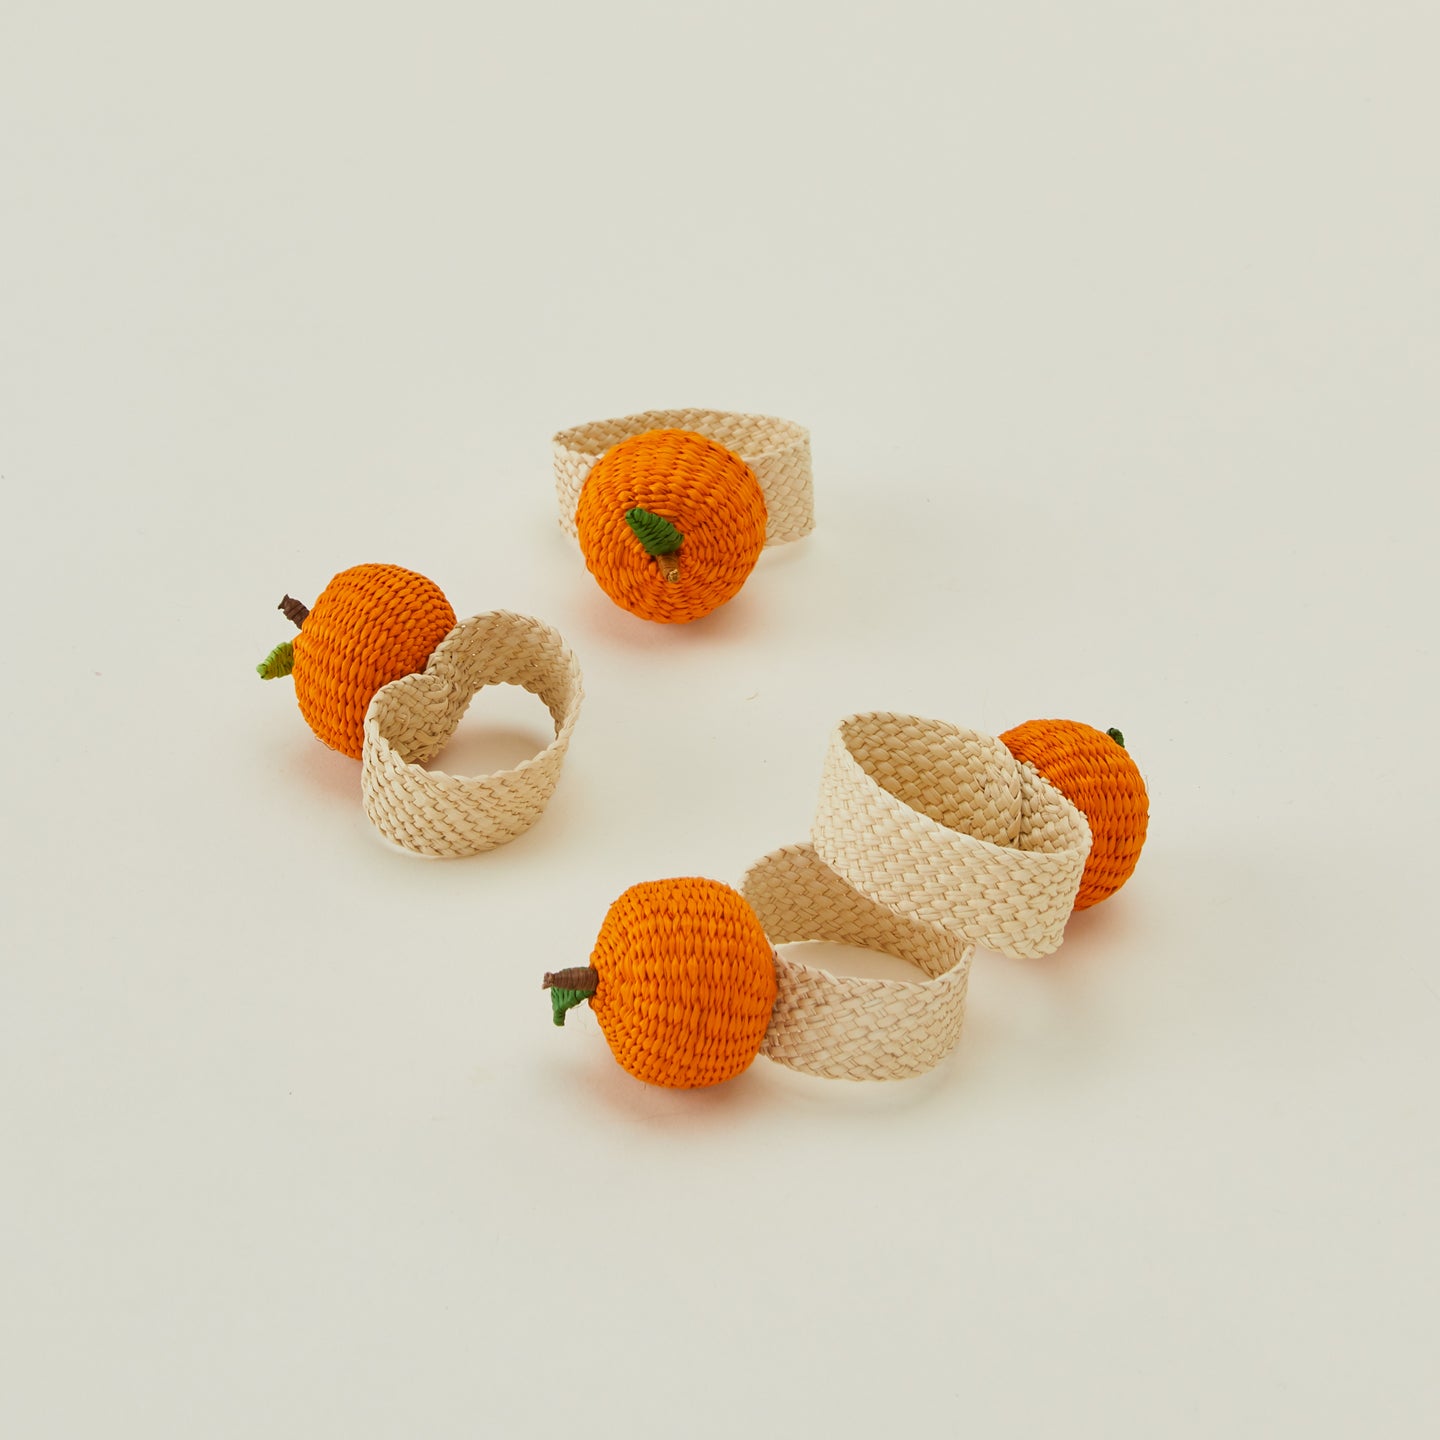 Woven Fruit Napkin Ring, Set of 4 - Orange